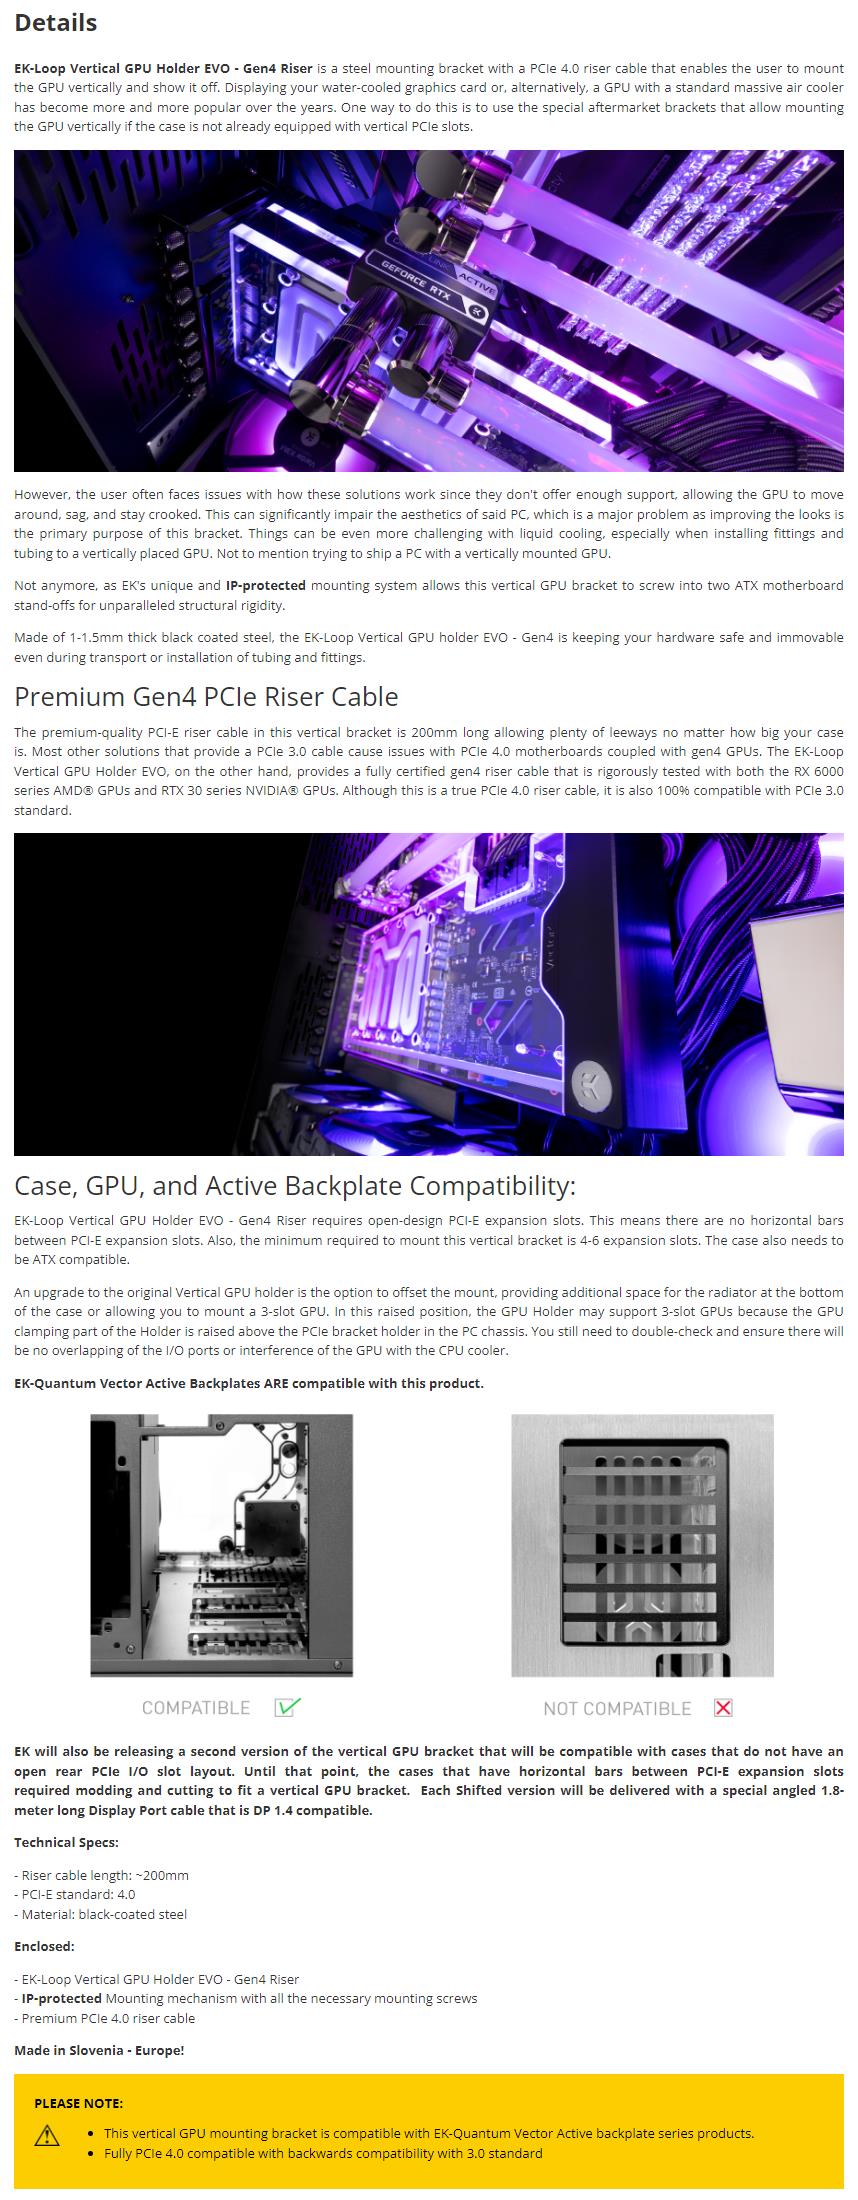 A large marketing image providing additional information about the product EK-Loop Vertical GPU Holder EVO - Gen4 Riser - Additional alt info not provided